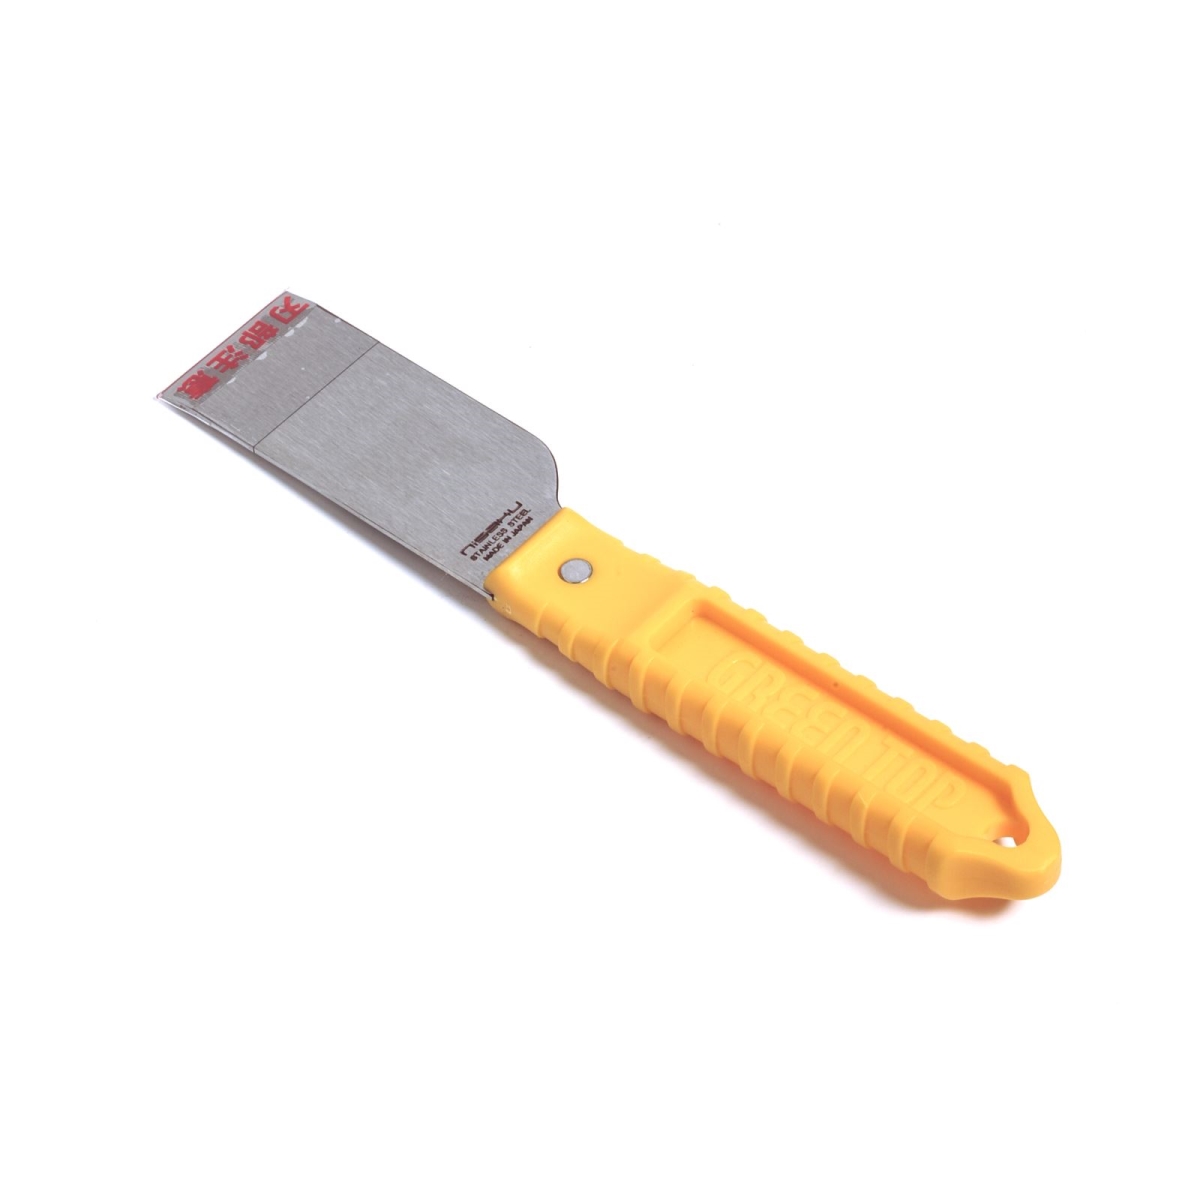 Njp570 1.5 In. Blade Stainless Steel Scraper Knife, Yellow